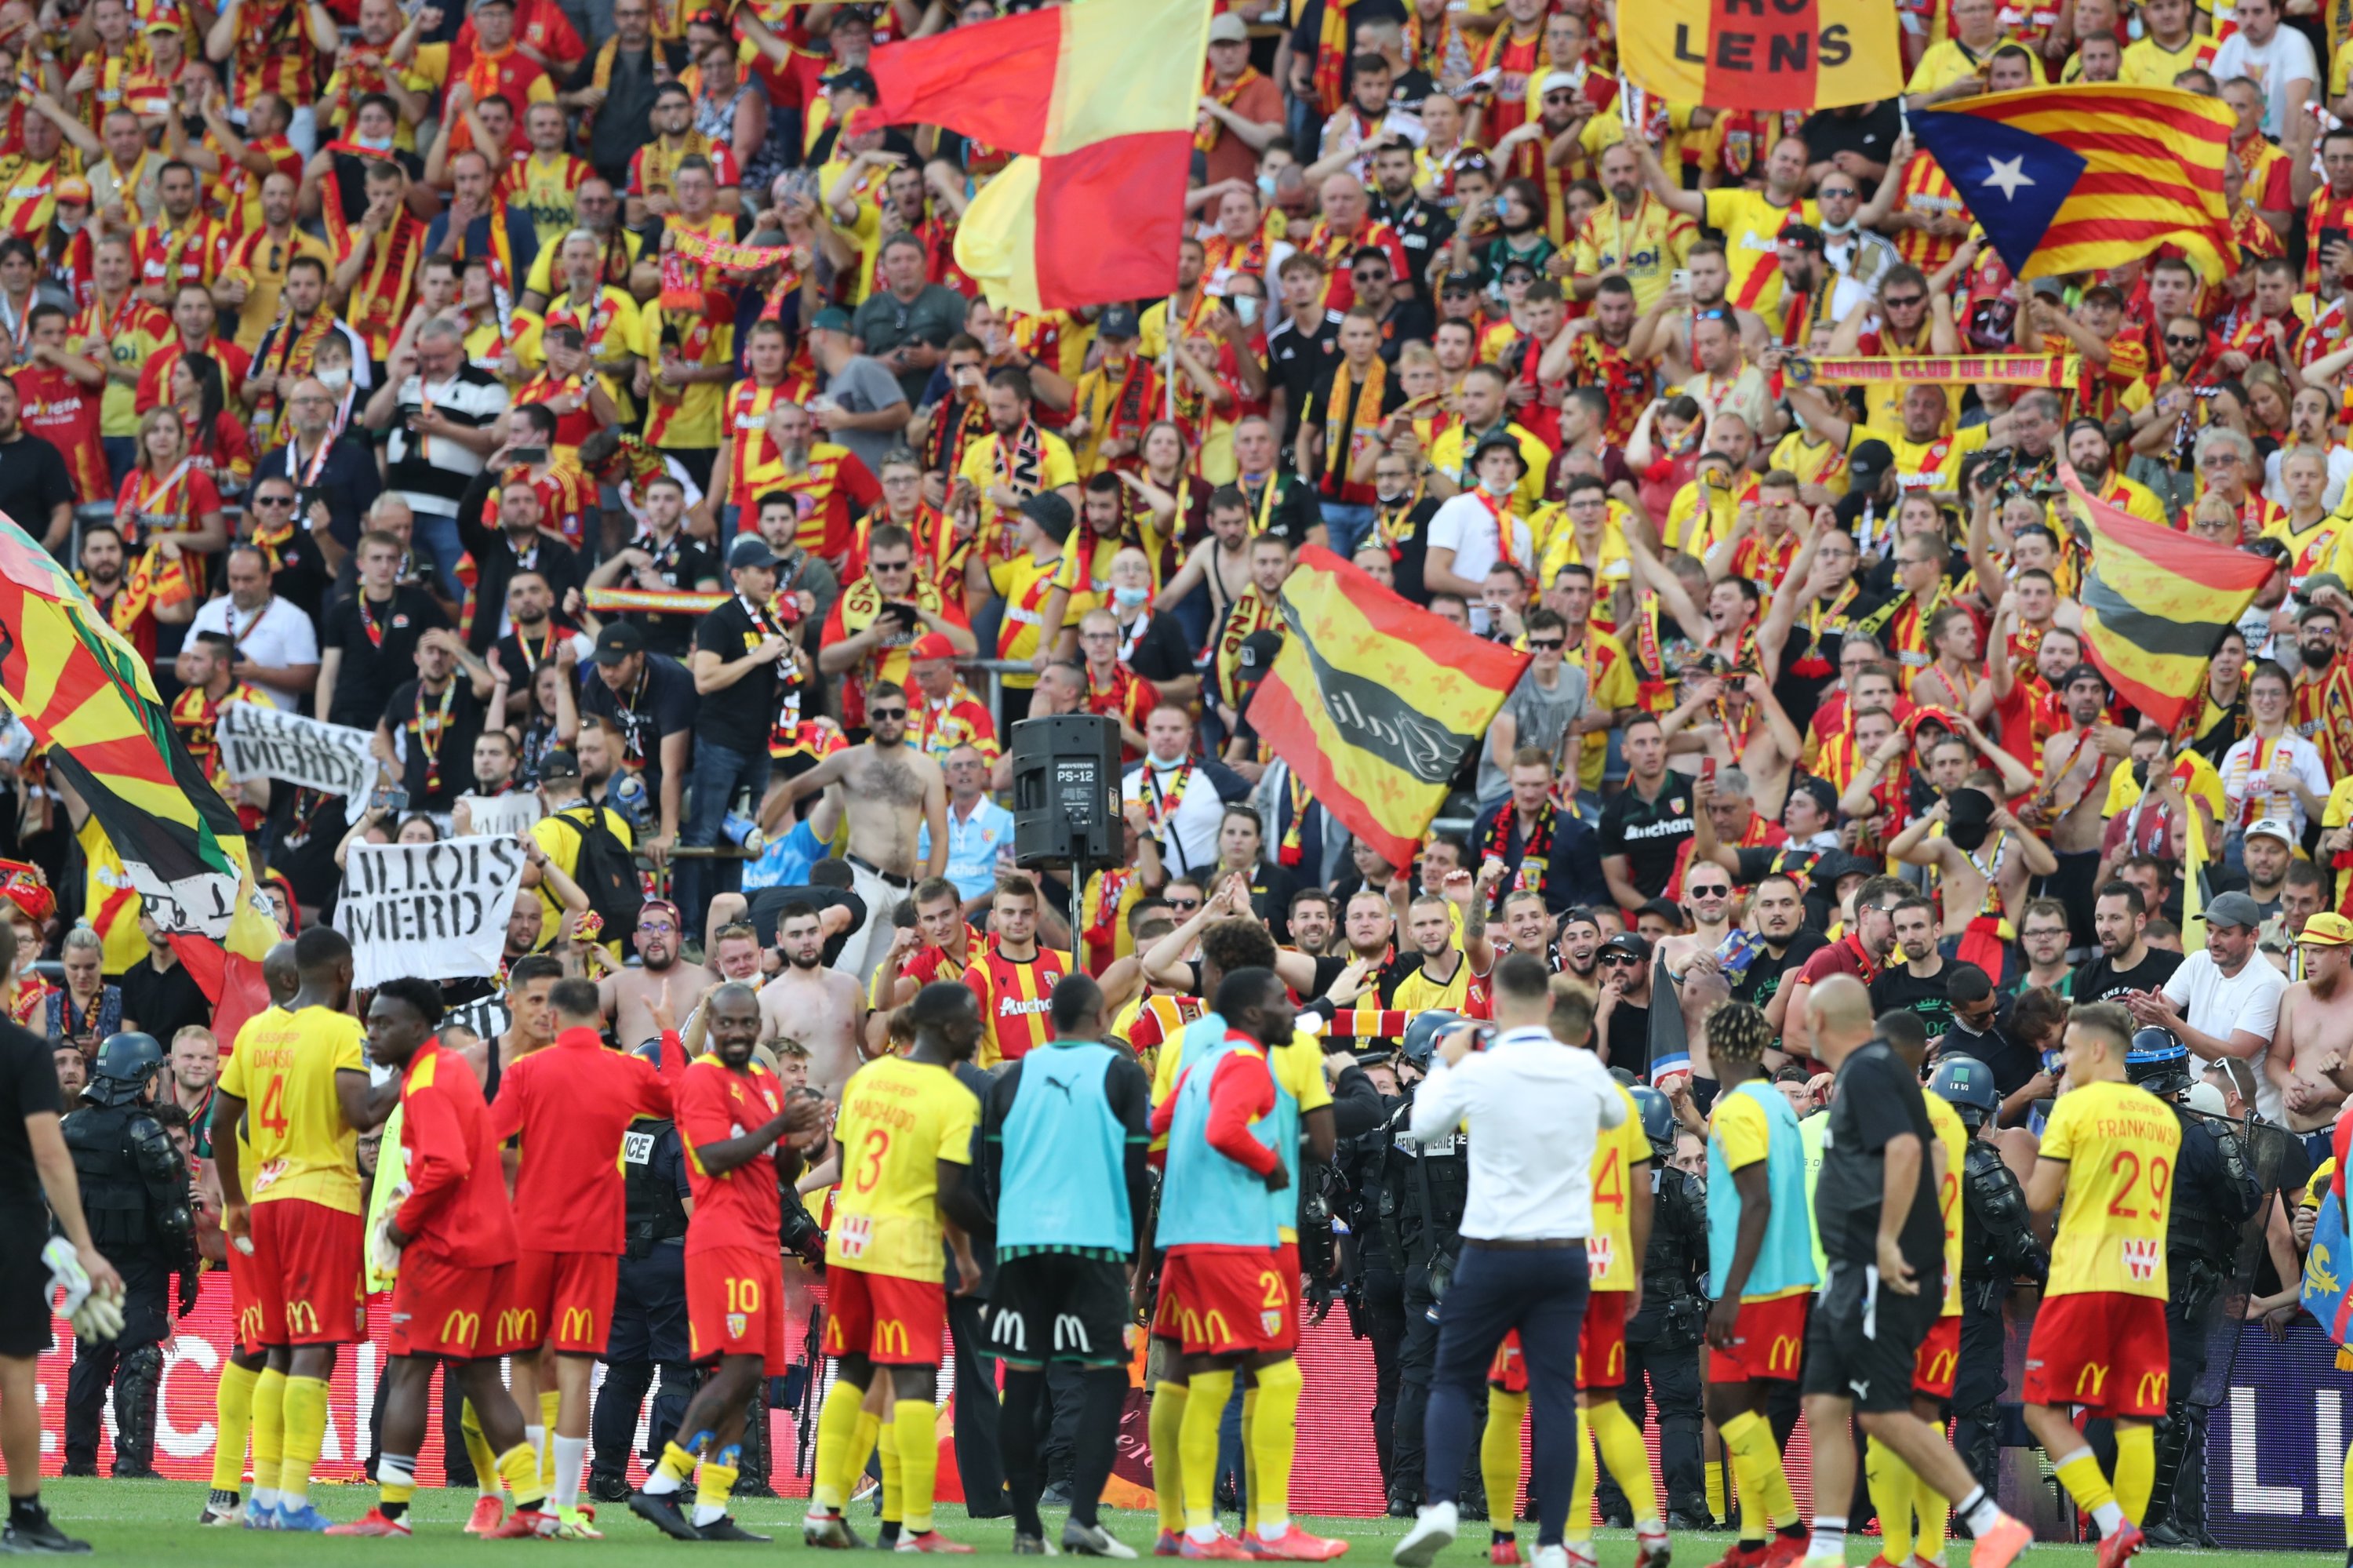 Frank speer landen Lens defeats Lille in northern France derby marred by fan violence | Daily  Sabah